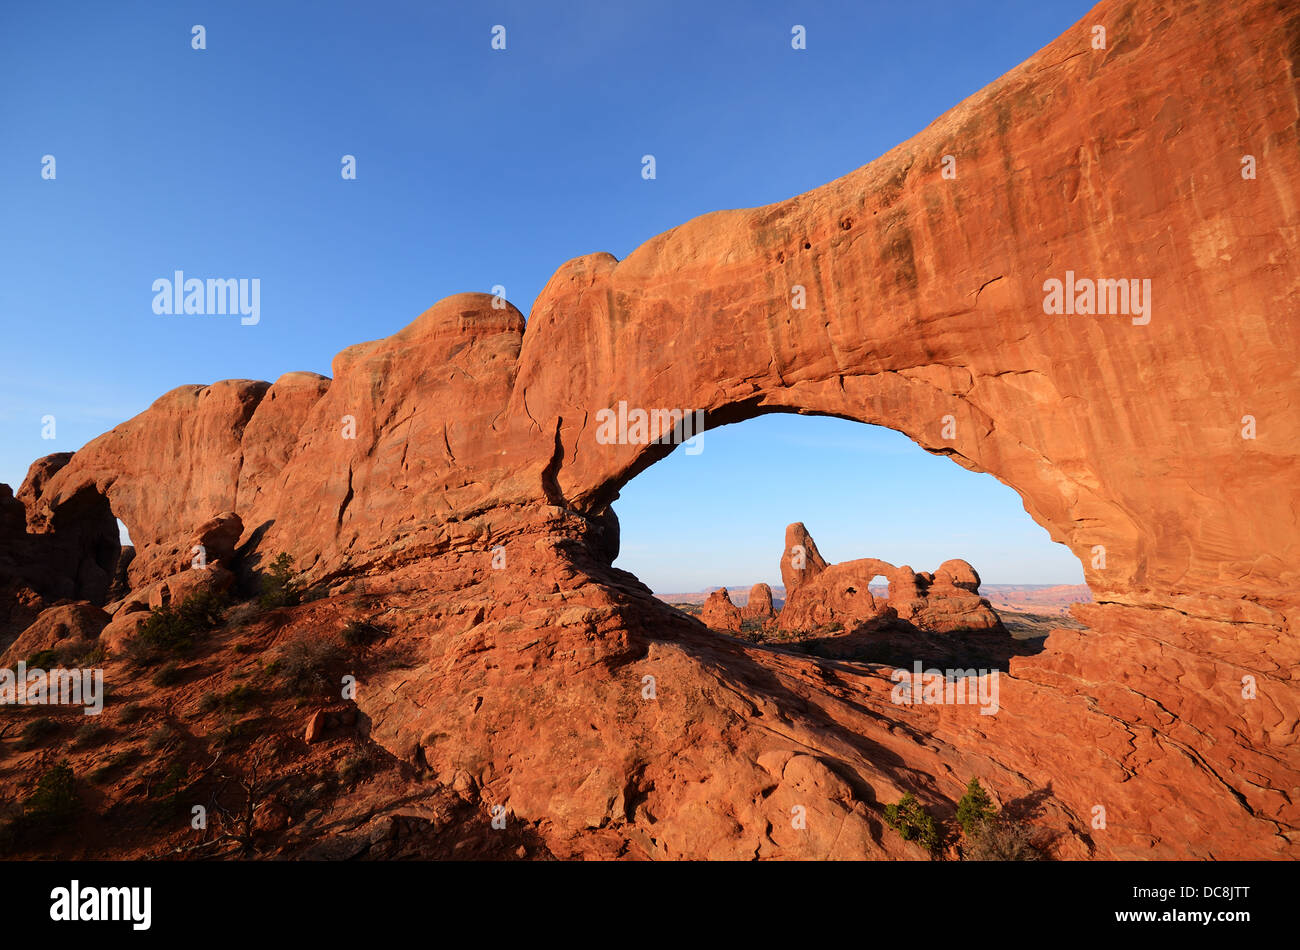 La fenêtre du Nord arch rock formation in the Arches National Park, Utah, USA Banque D'Images